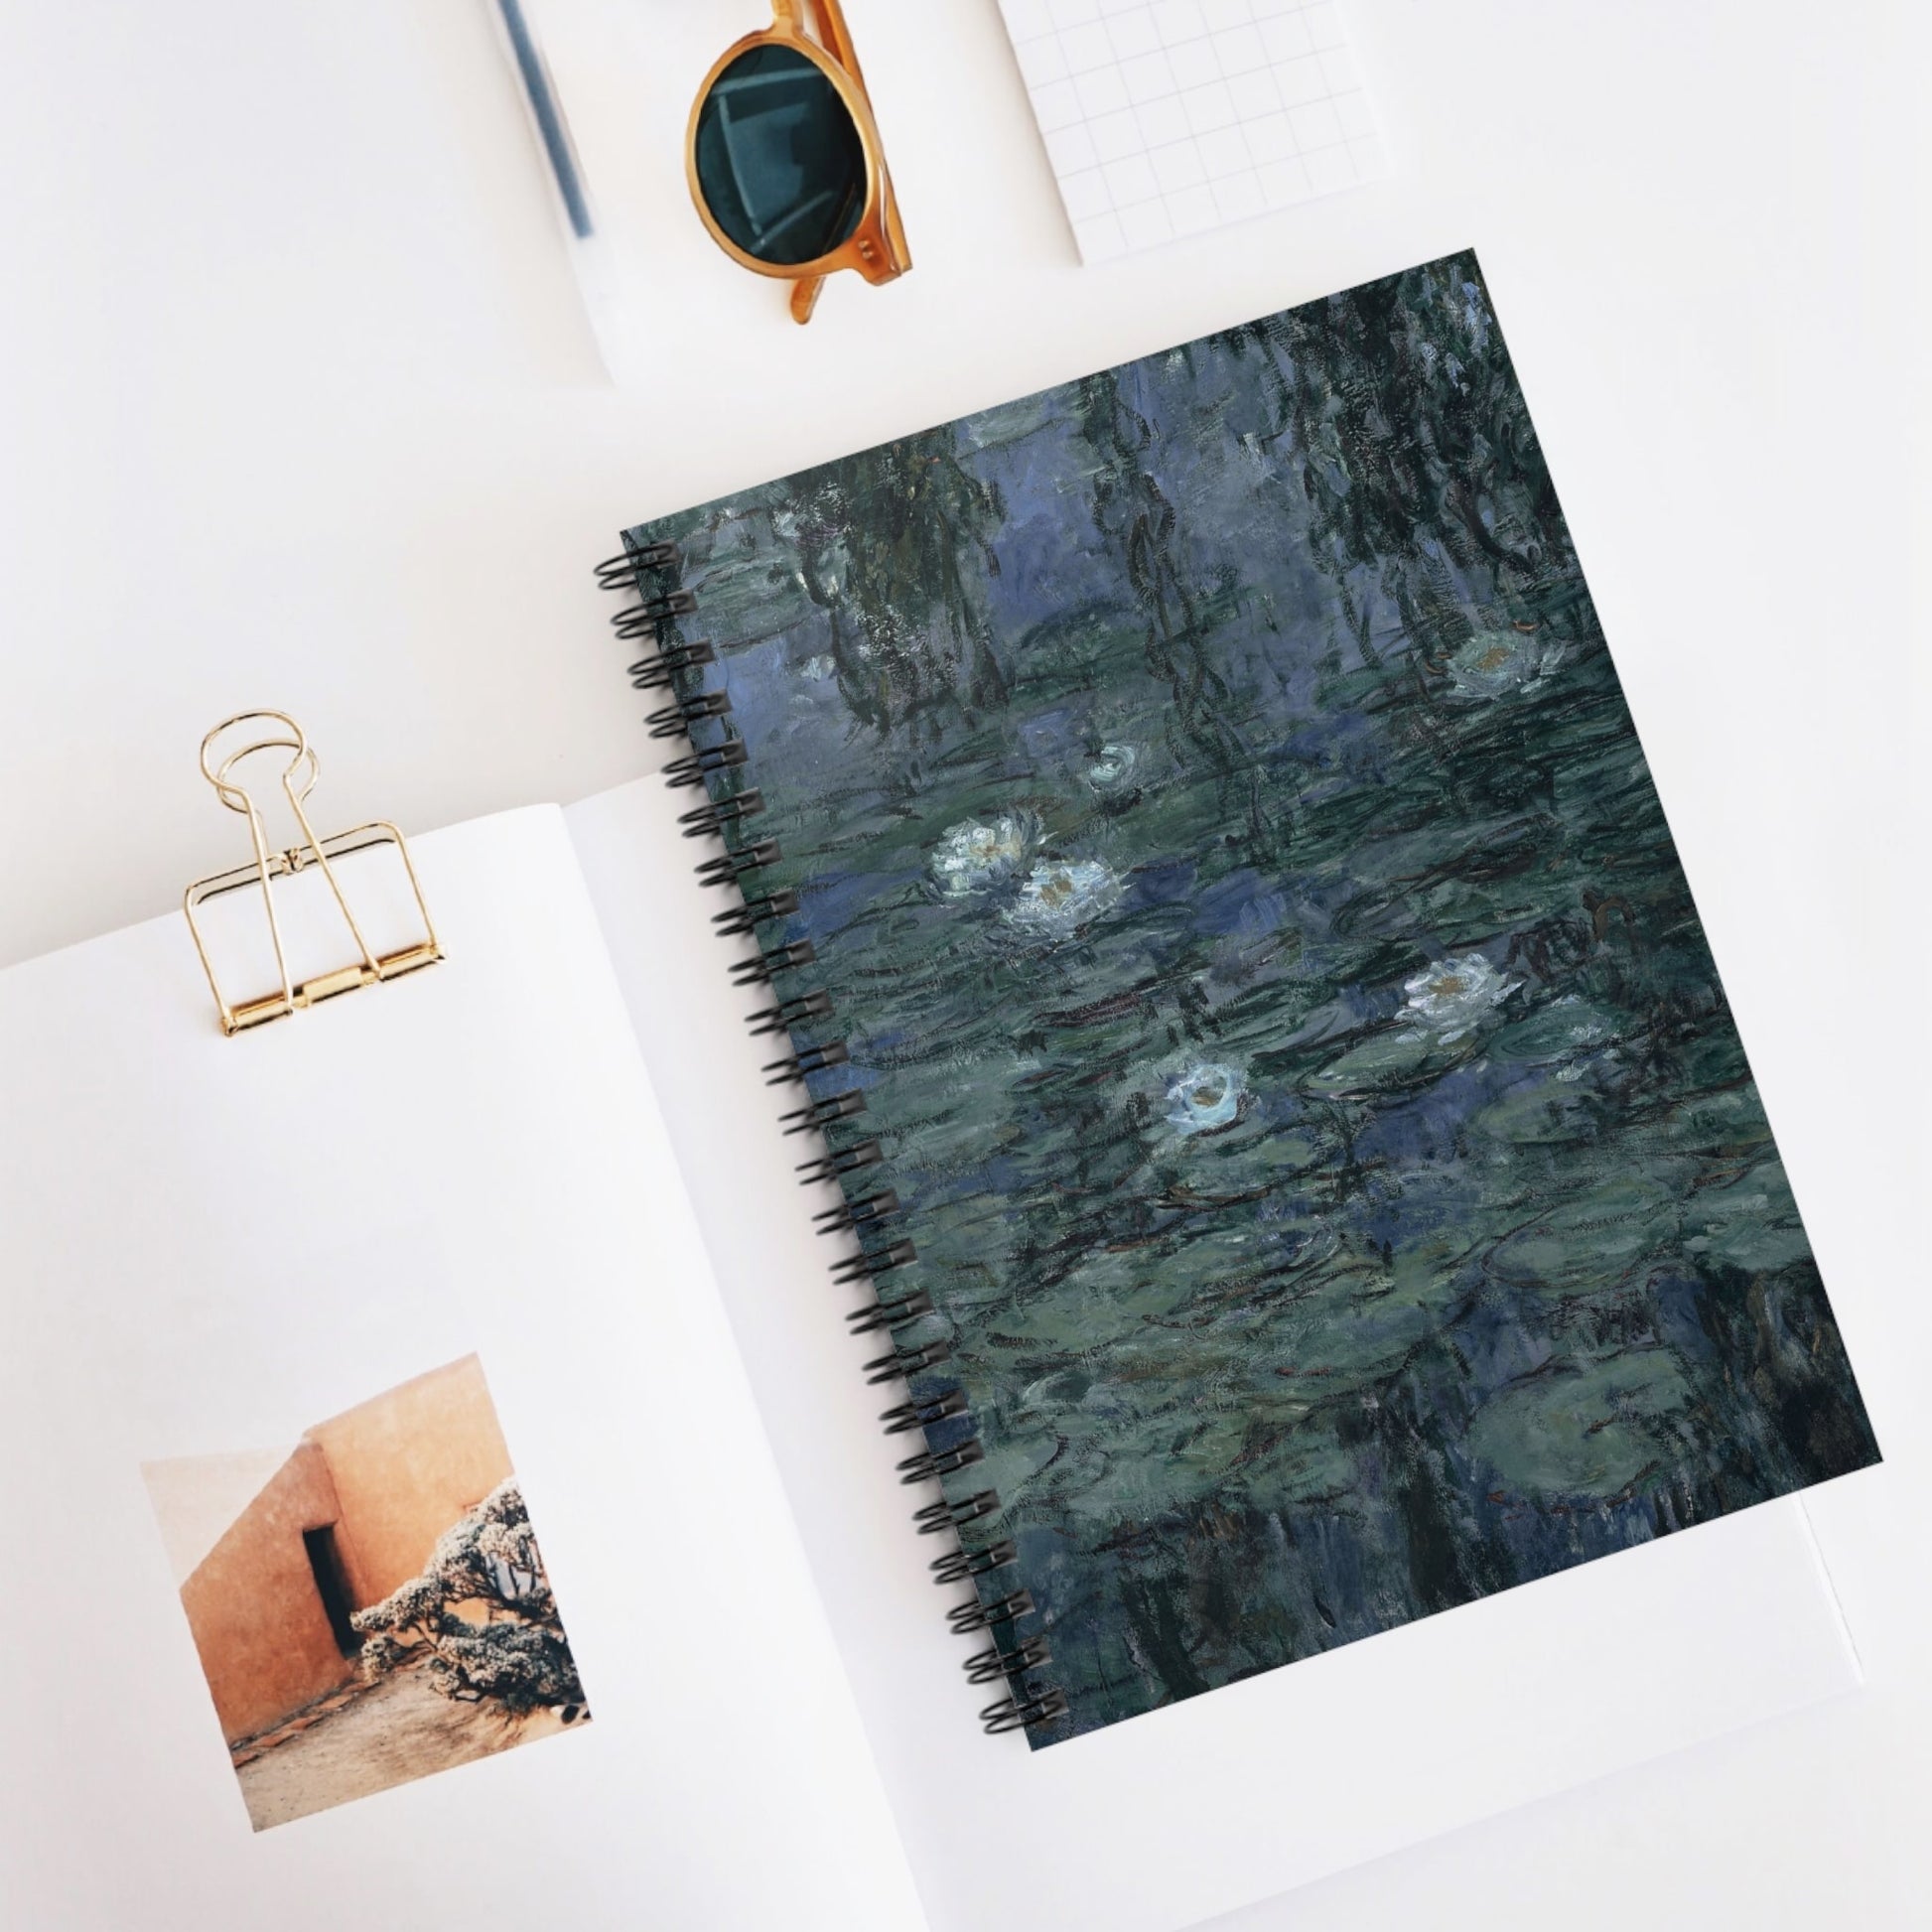 Deep Blue and Green Spiral Notebook Displayed on Desk